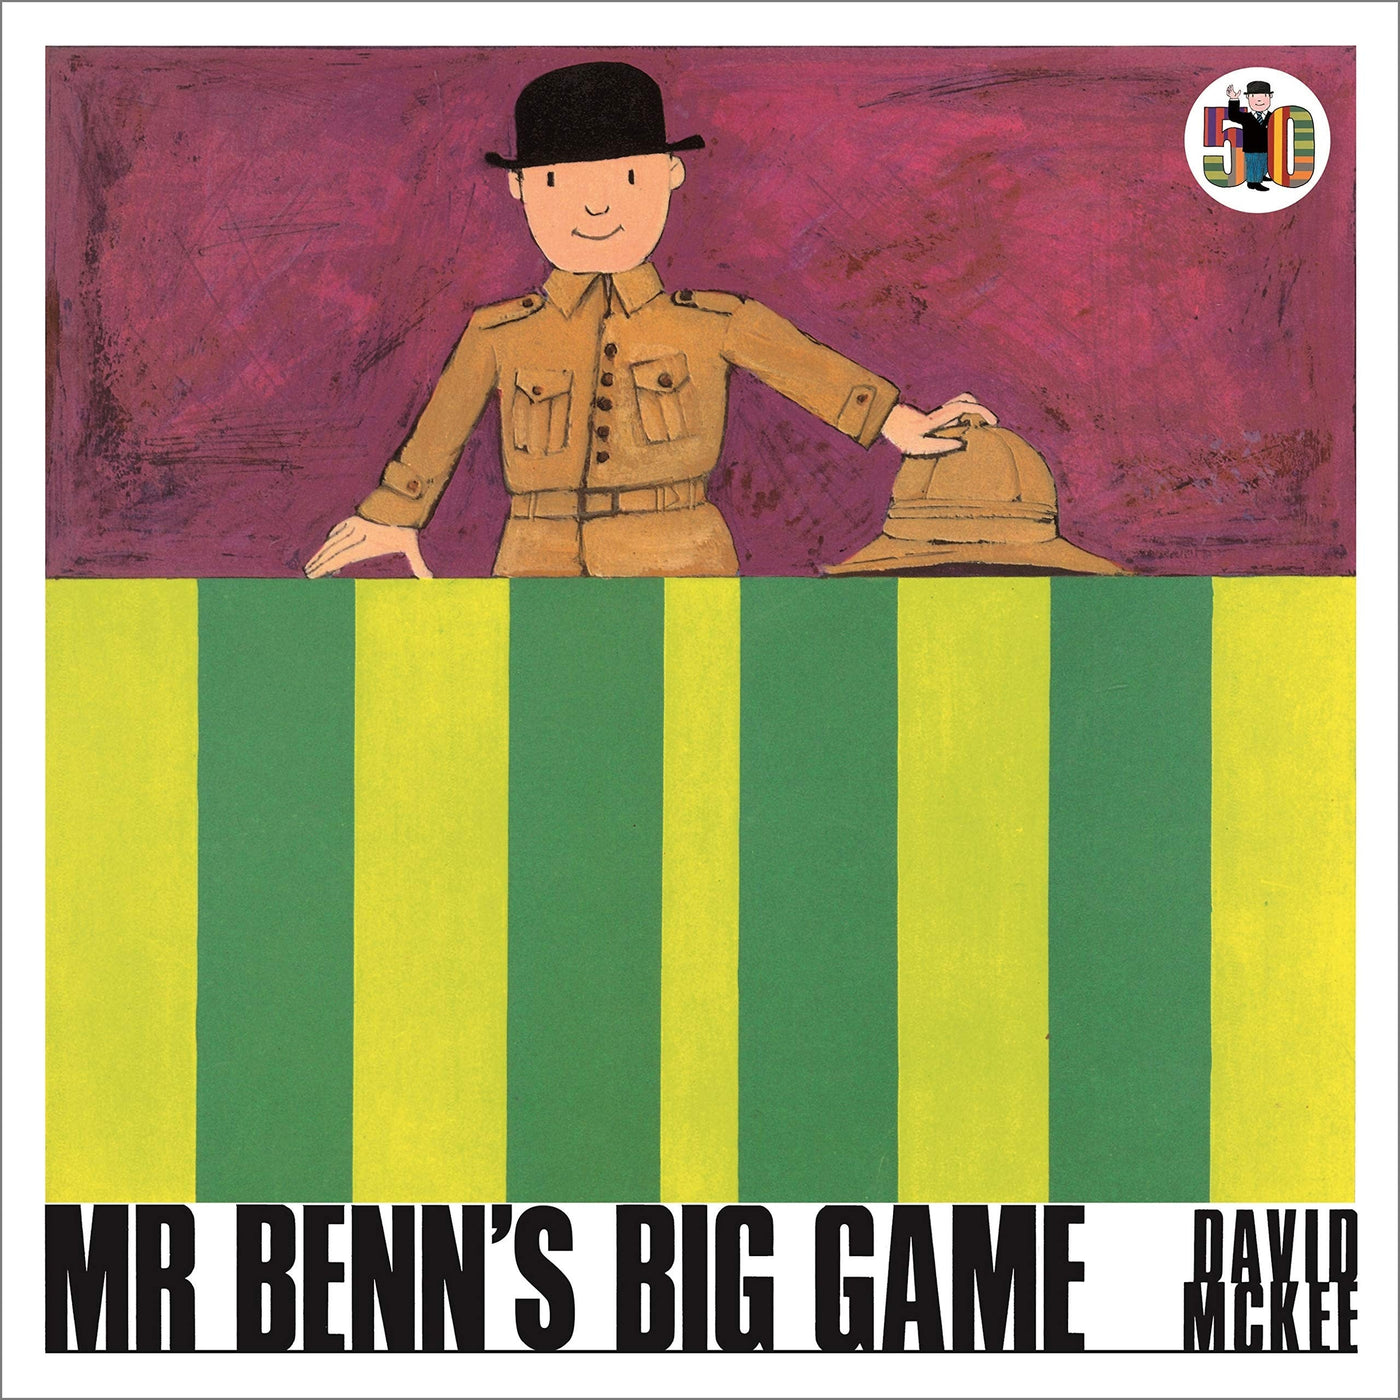 Mr Benn's Big Game - David Mckee